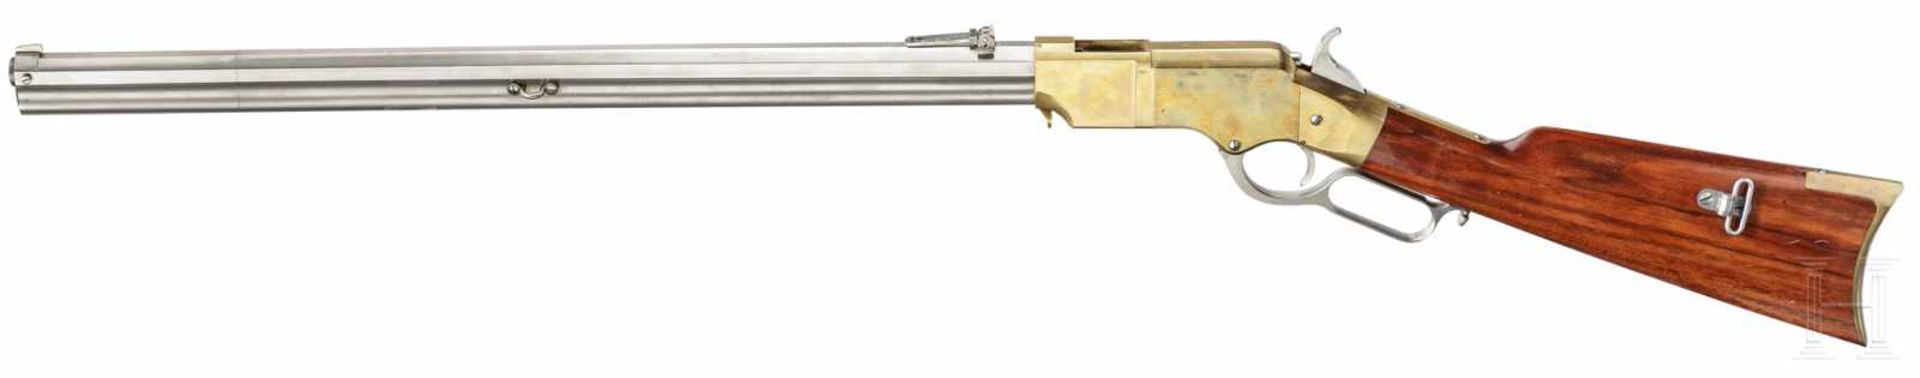 Henry Rifle "One of One Thousand", Hege Replika - Bild 2 aus 4